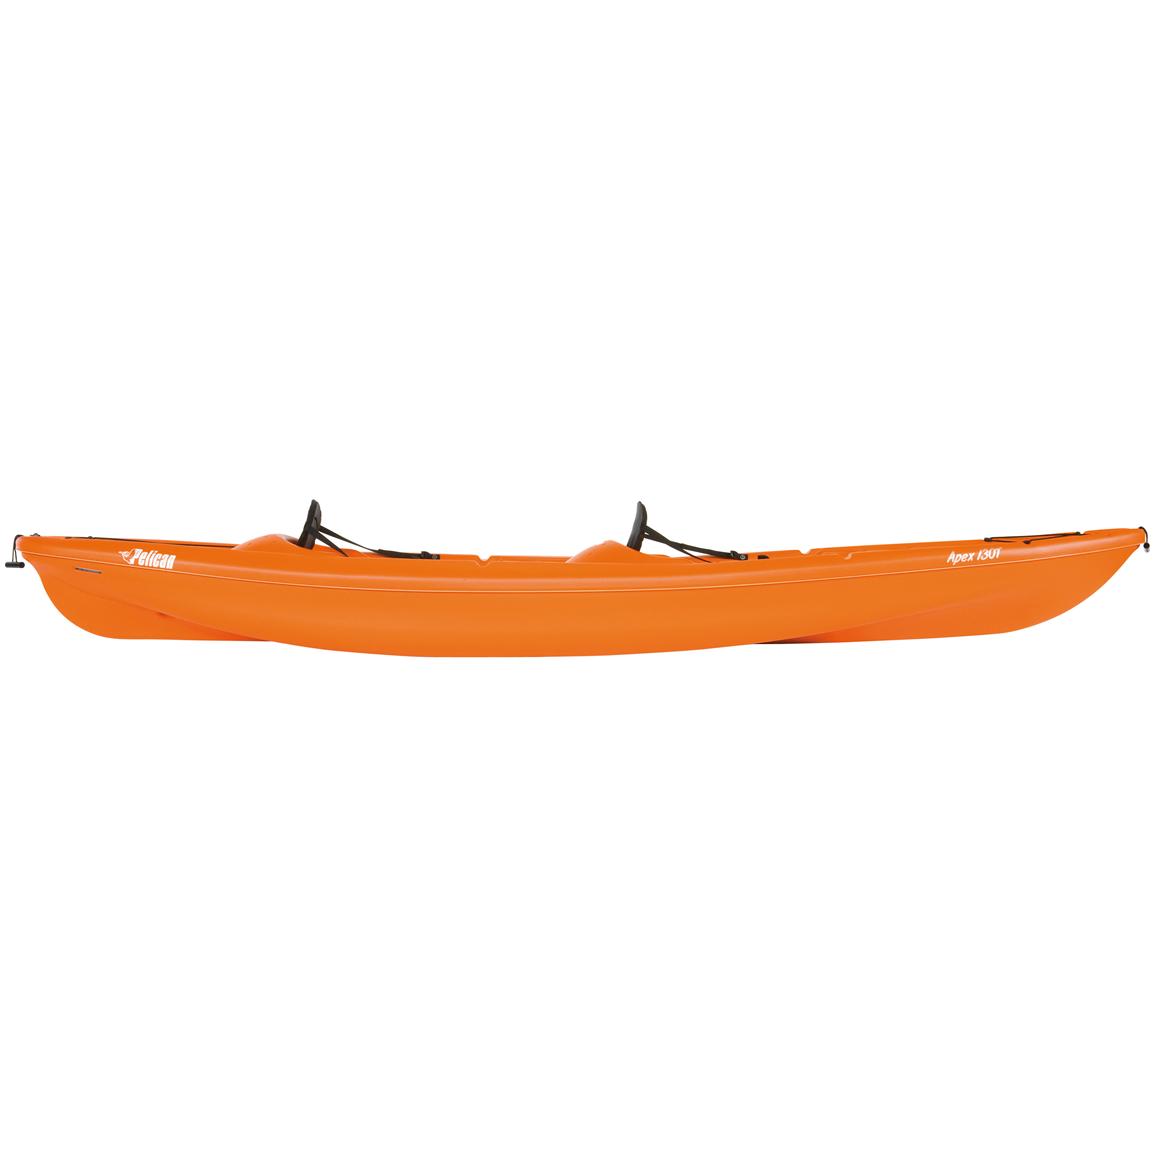 Pelican™ Apex 130T Kayak, Orange - 183756, Canoes & Kayaks at Sportsman's Guide1154 x 1154